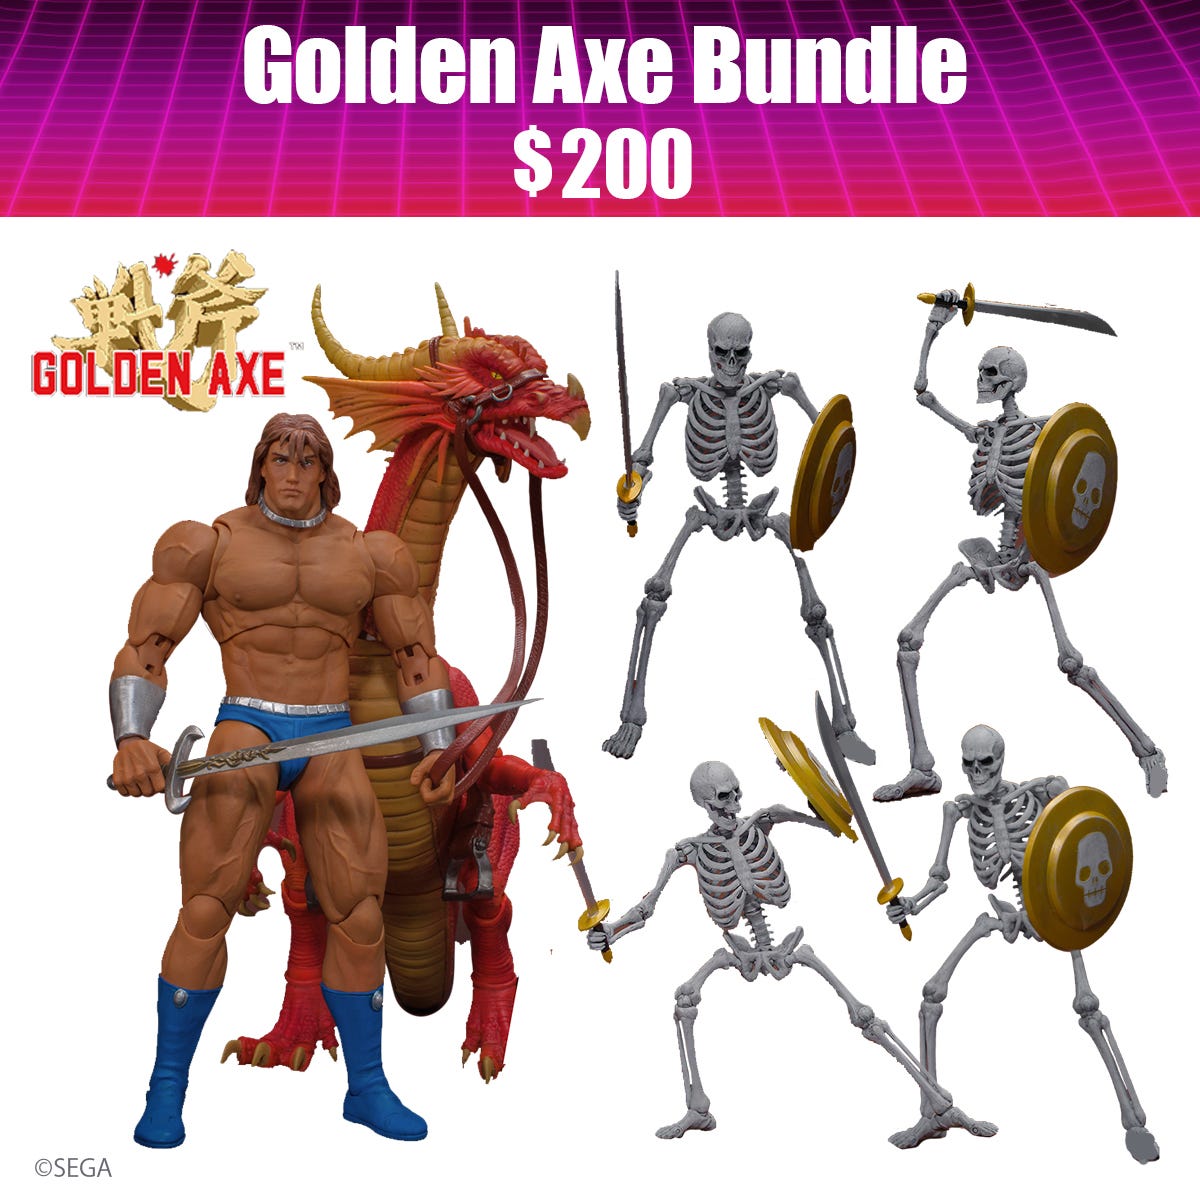 Golden Axe Skeleton Soldier Action Figure 2-Pack 